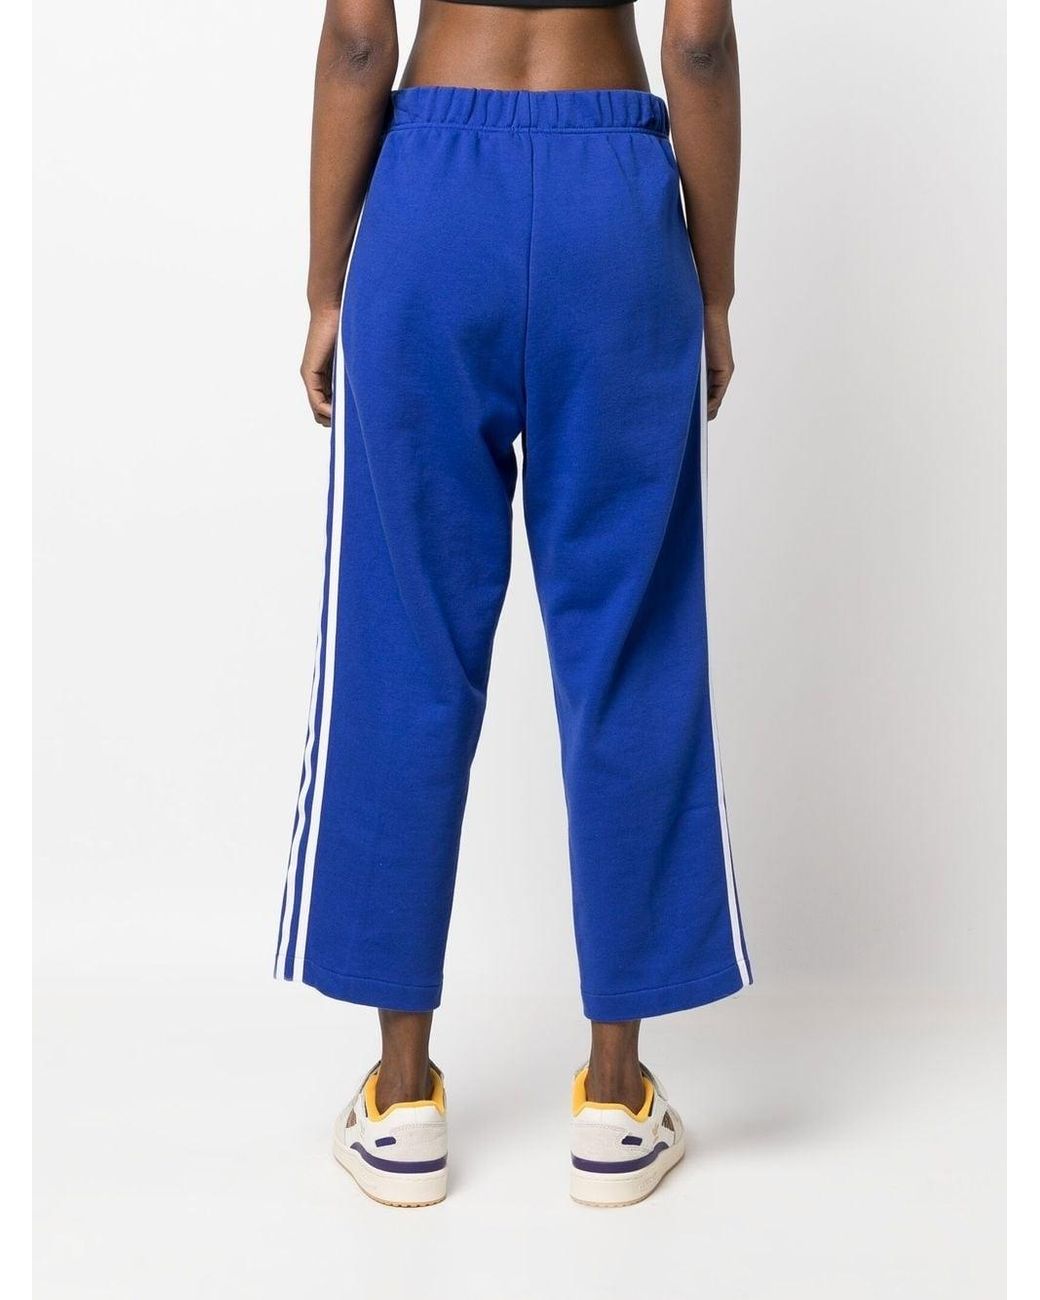 Adidas Cropped Capri Track Pants Medium NAVY BLUE Workout Stripe